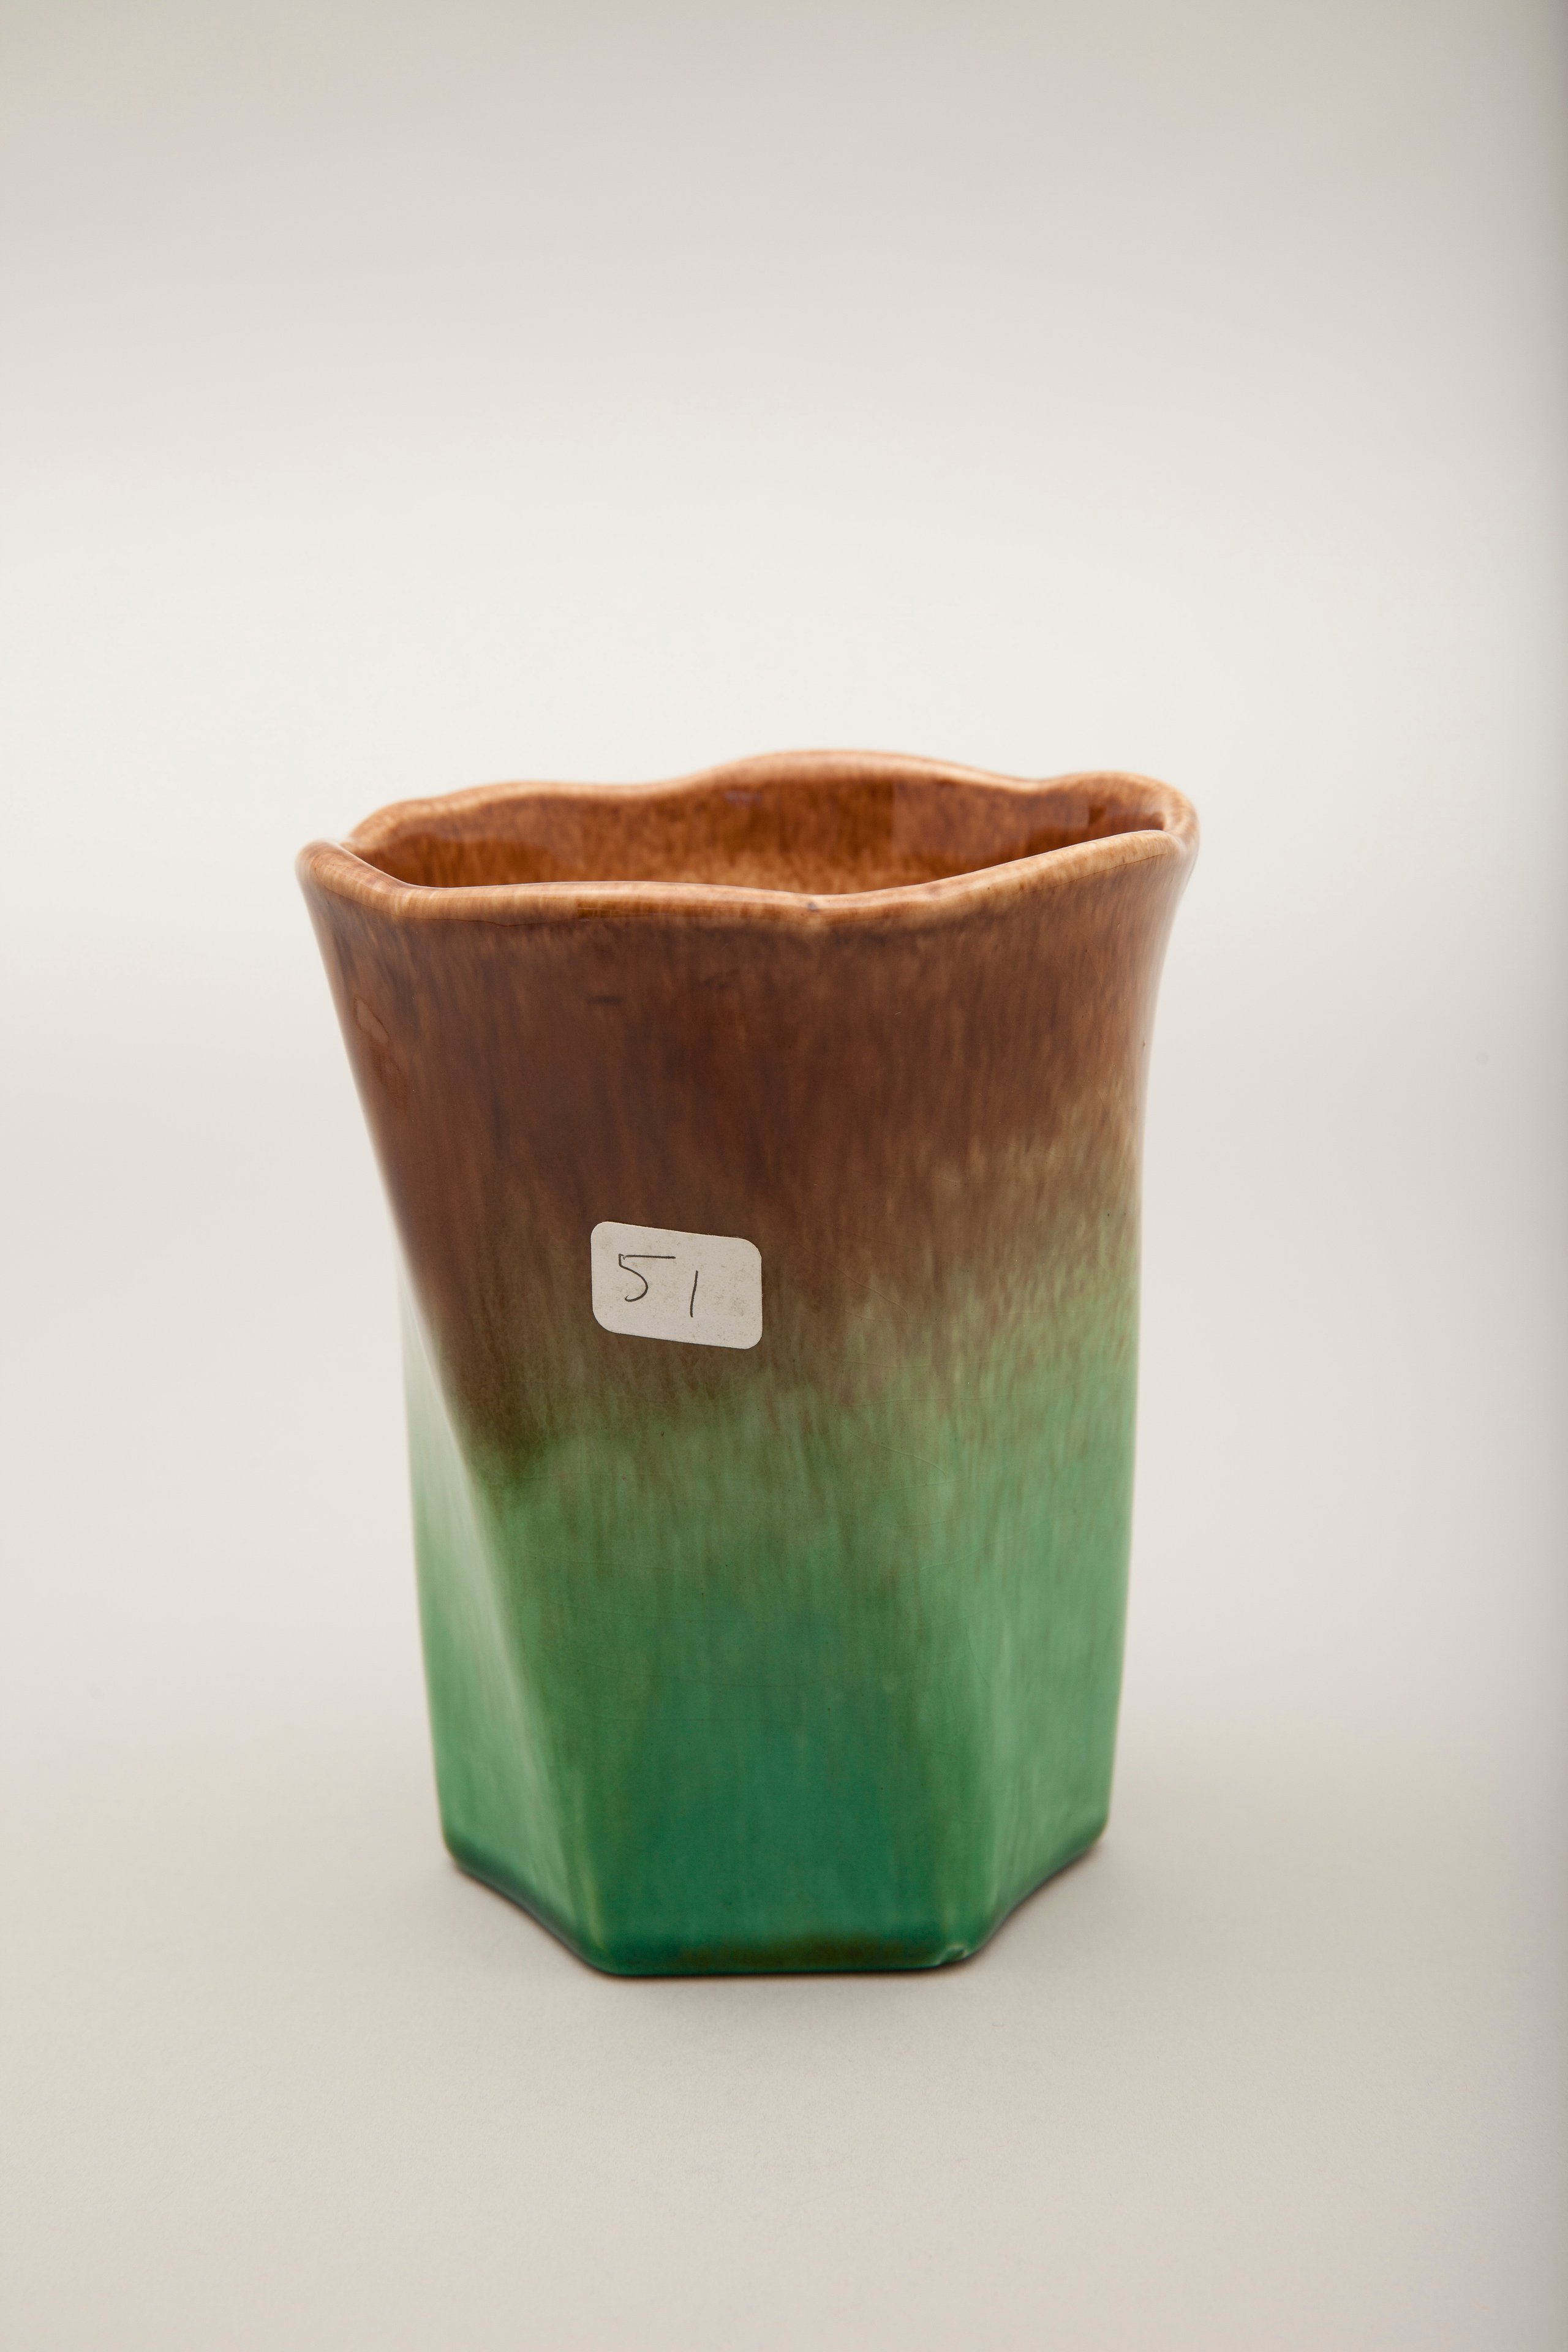 Vase by Pates Pottery